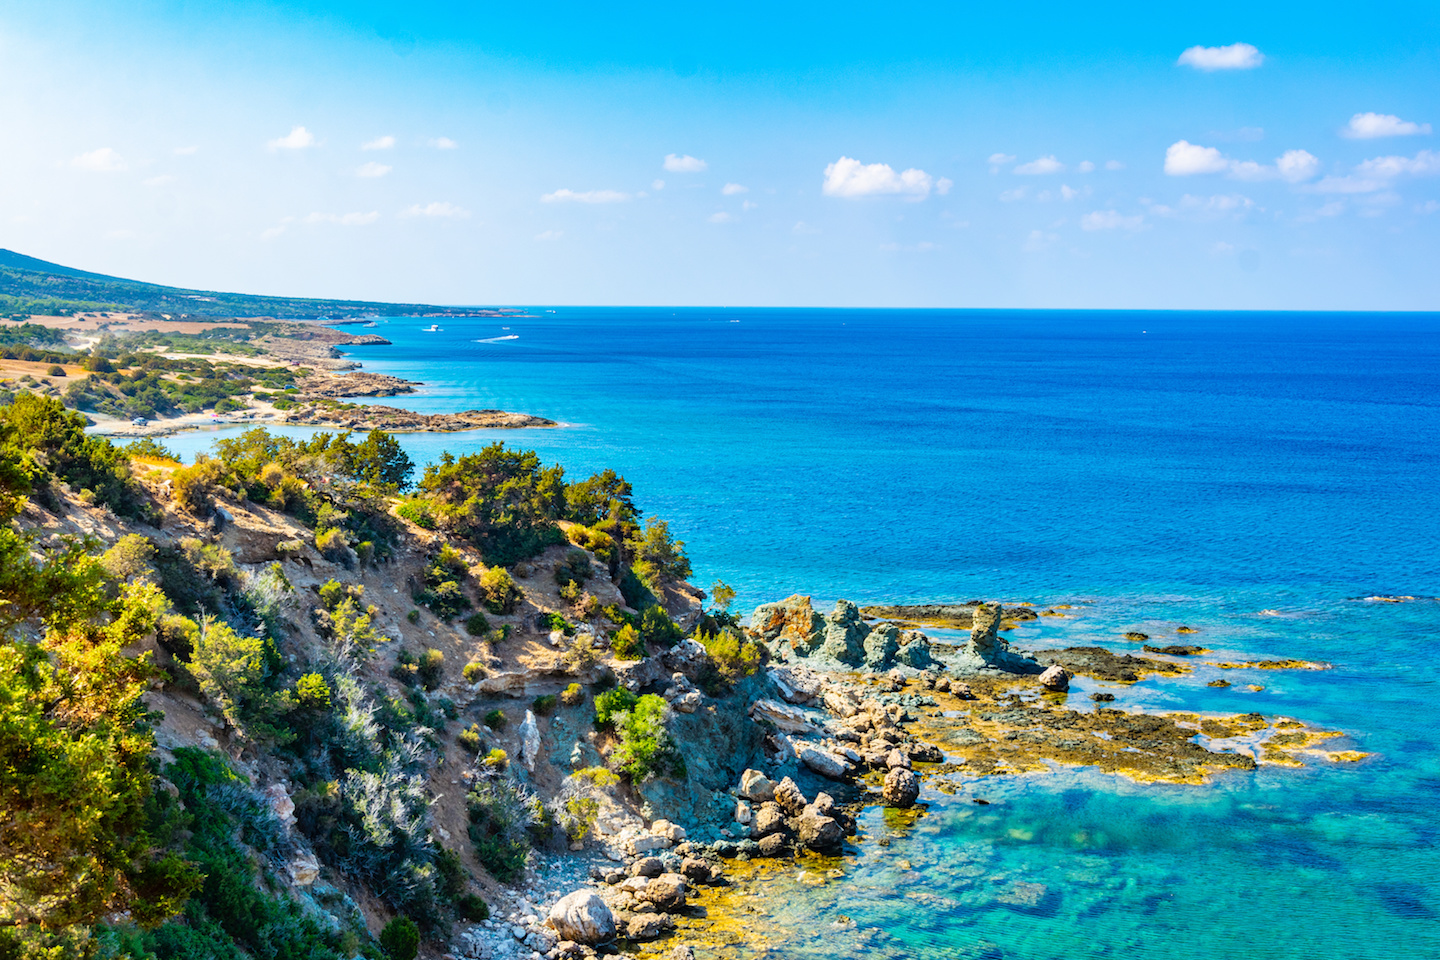 Ragged coast of Akamas peninsula on Cyprus